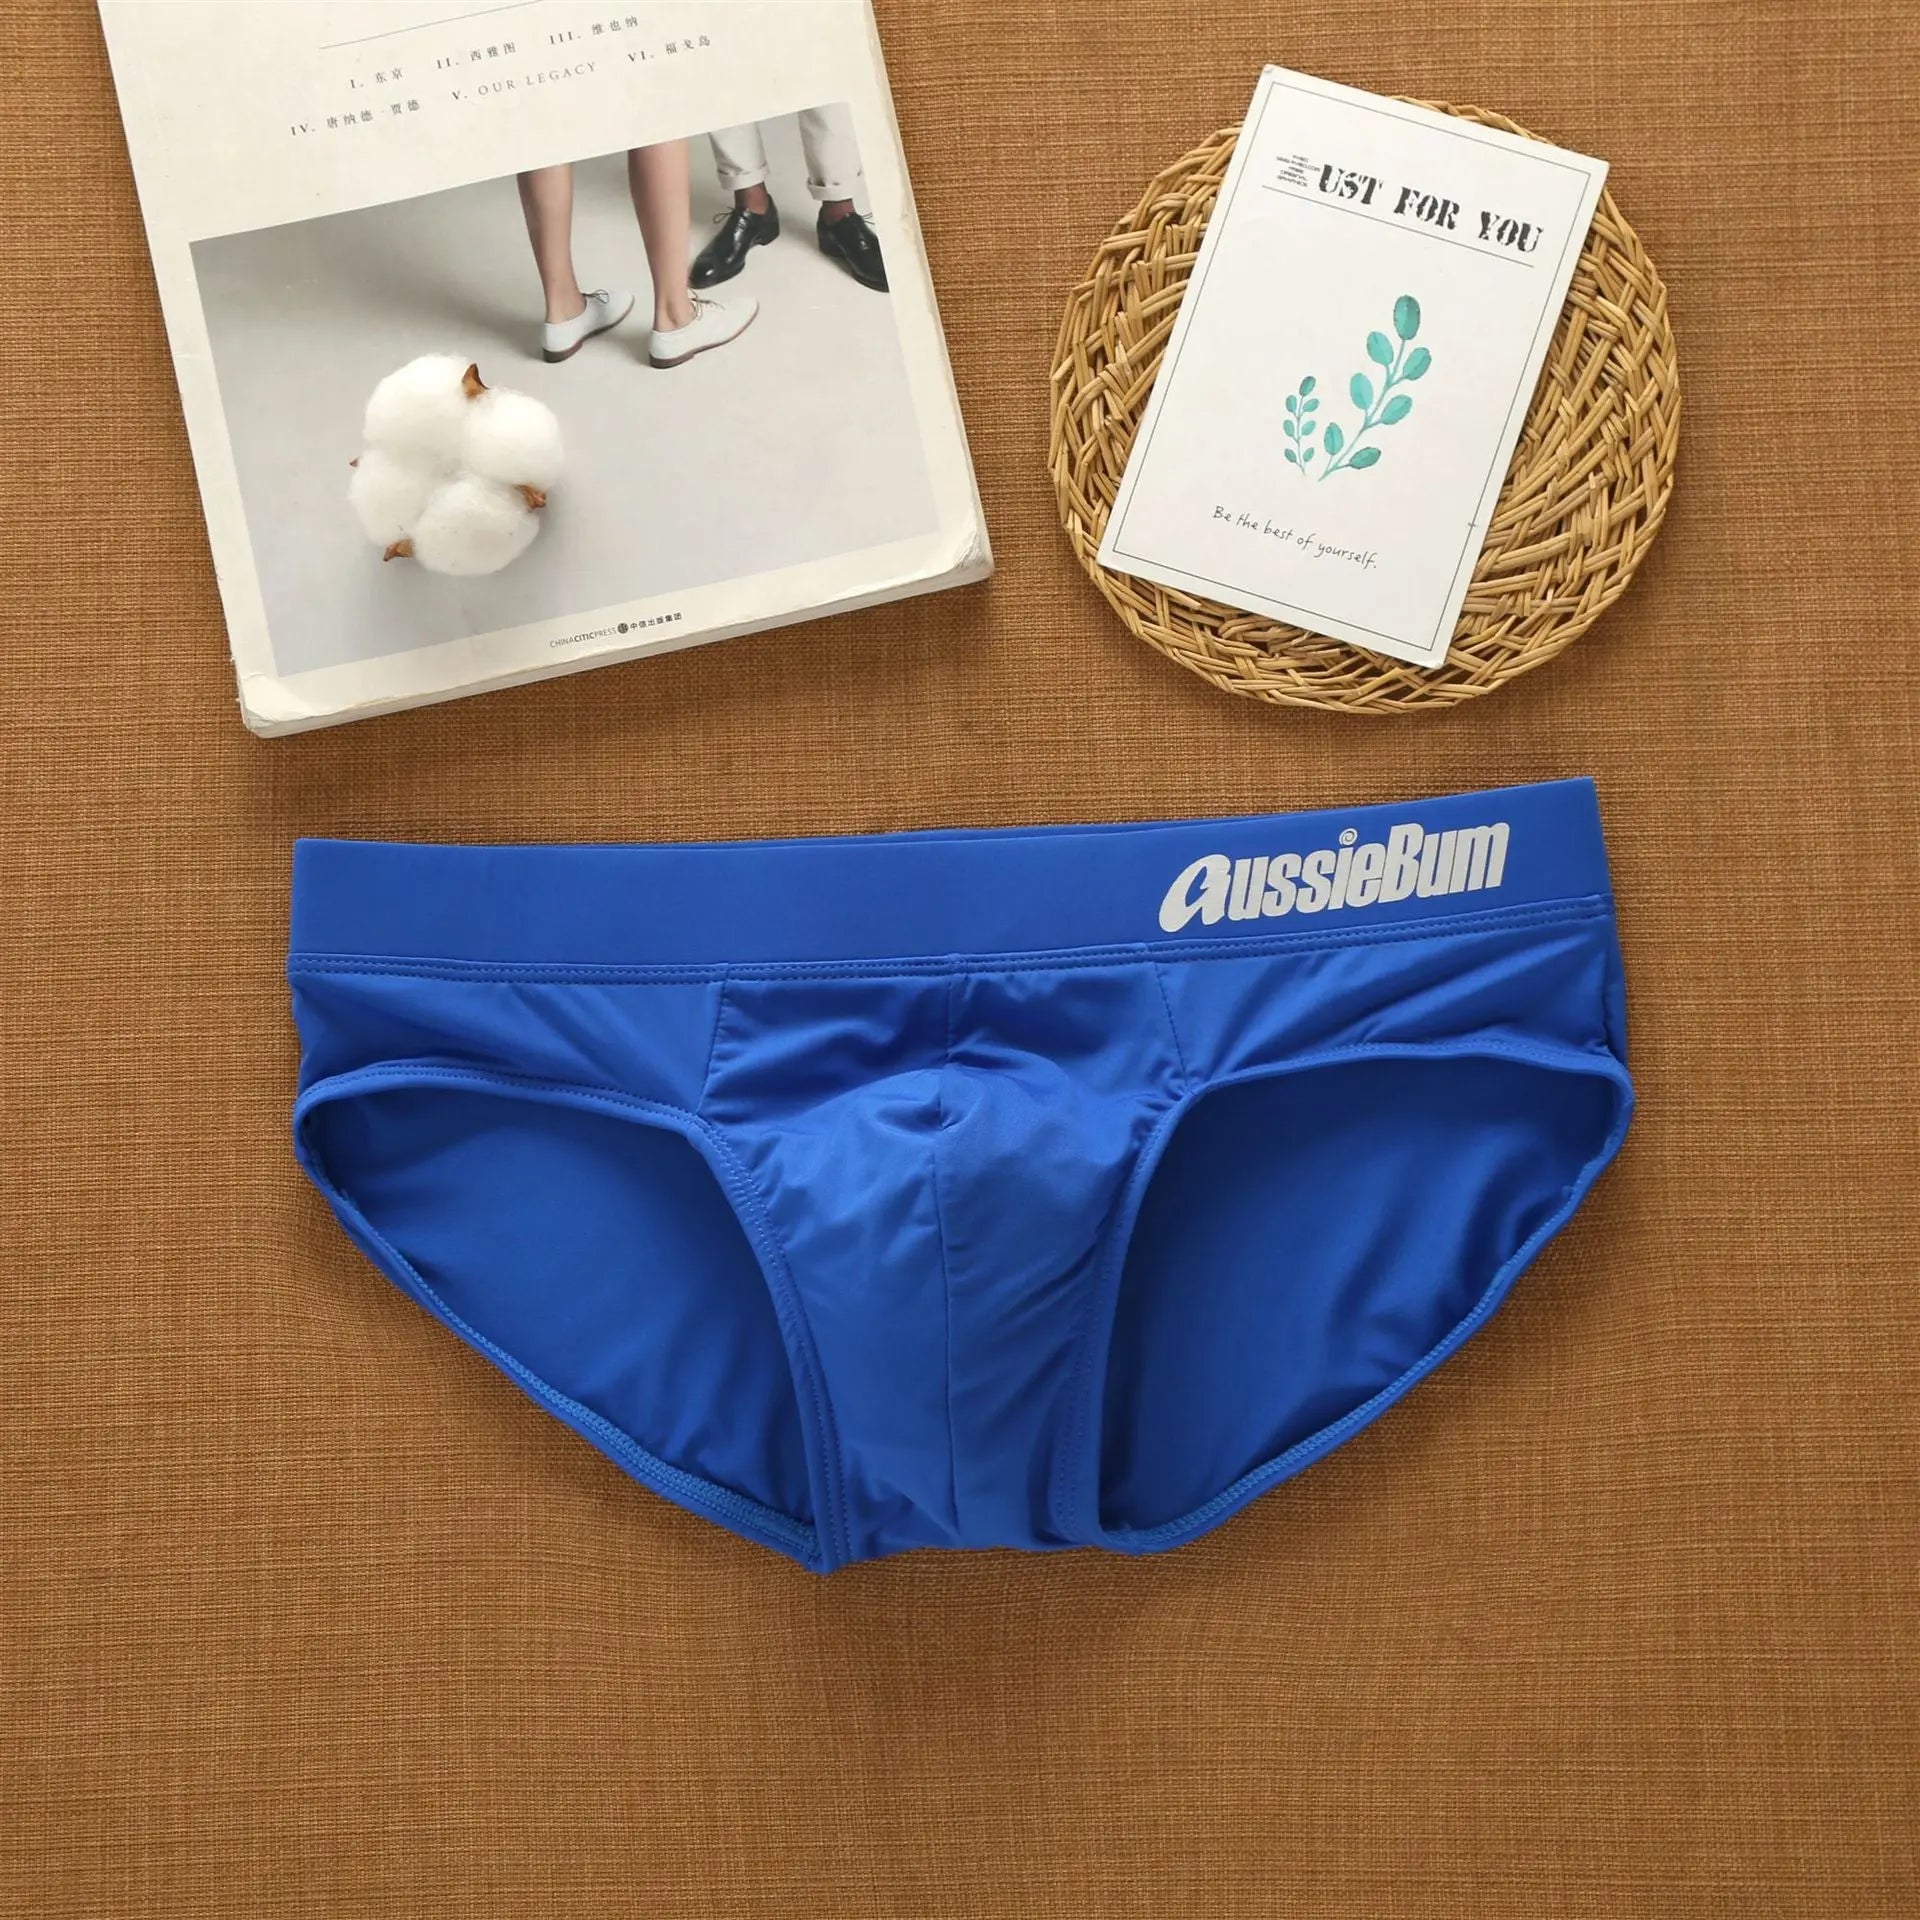 Shop Addicted Sunga Swim Brief - Real jock underwear, swimwear